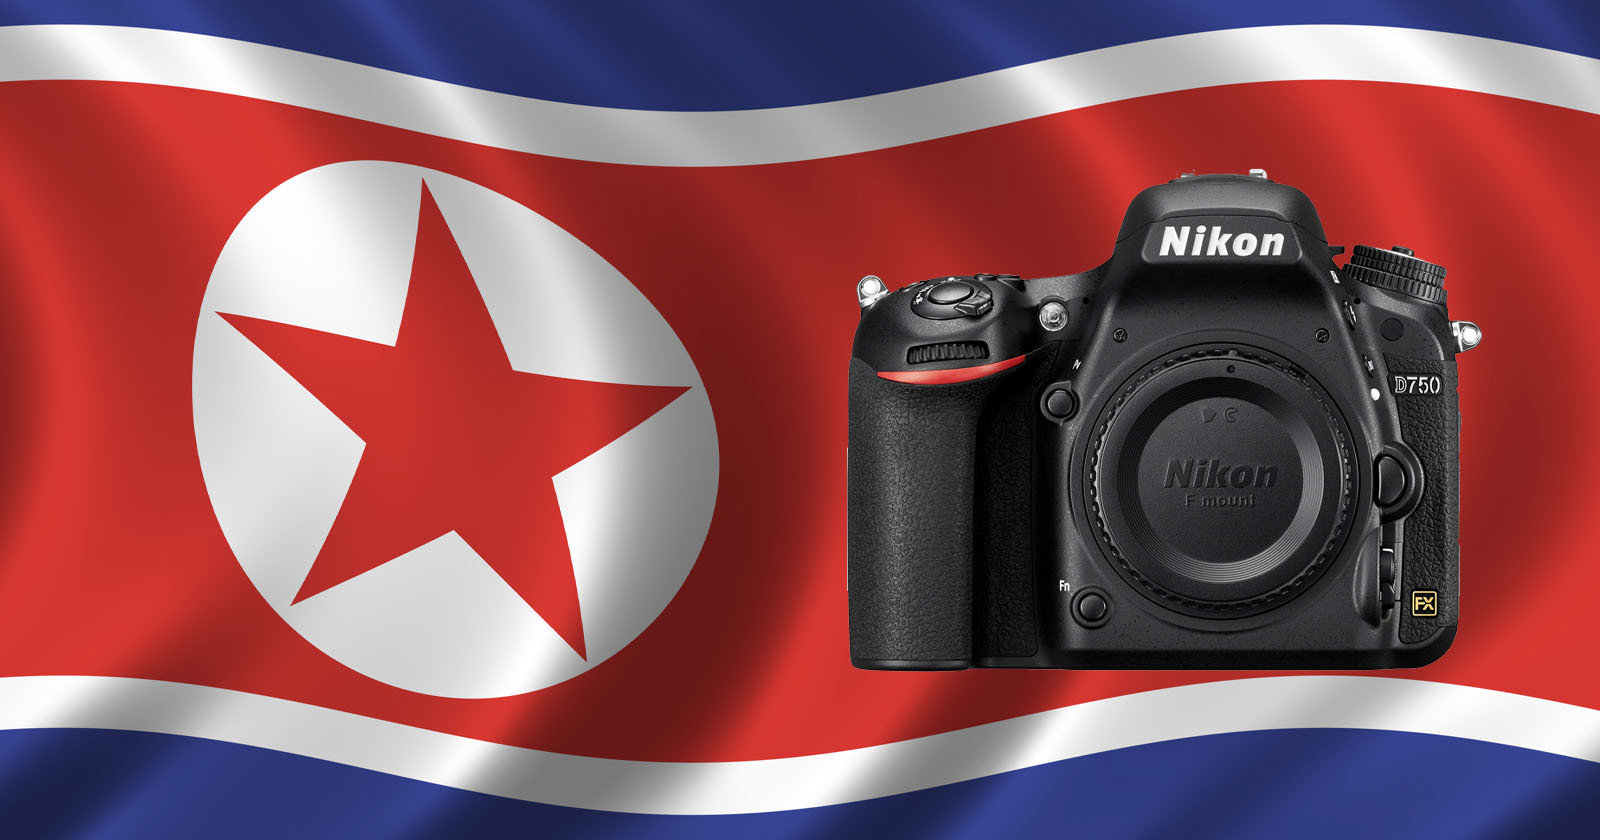  north korea propaganda photographers rely nikon d750 